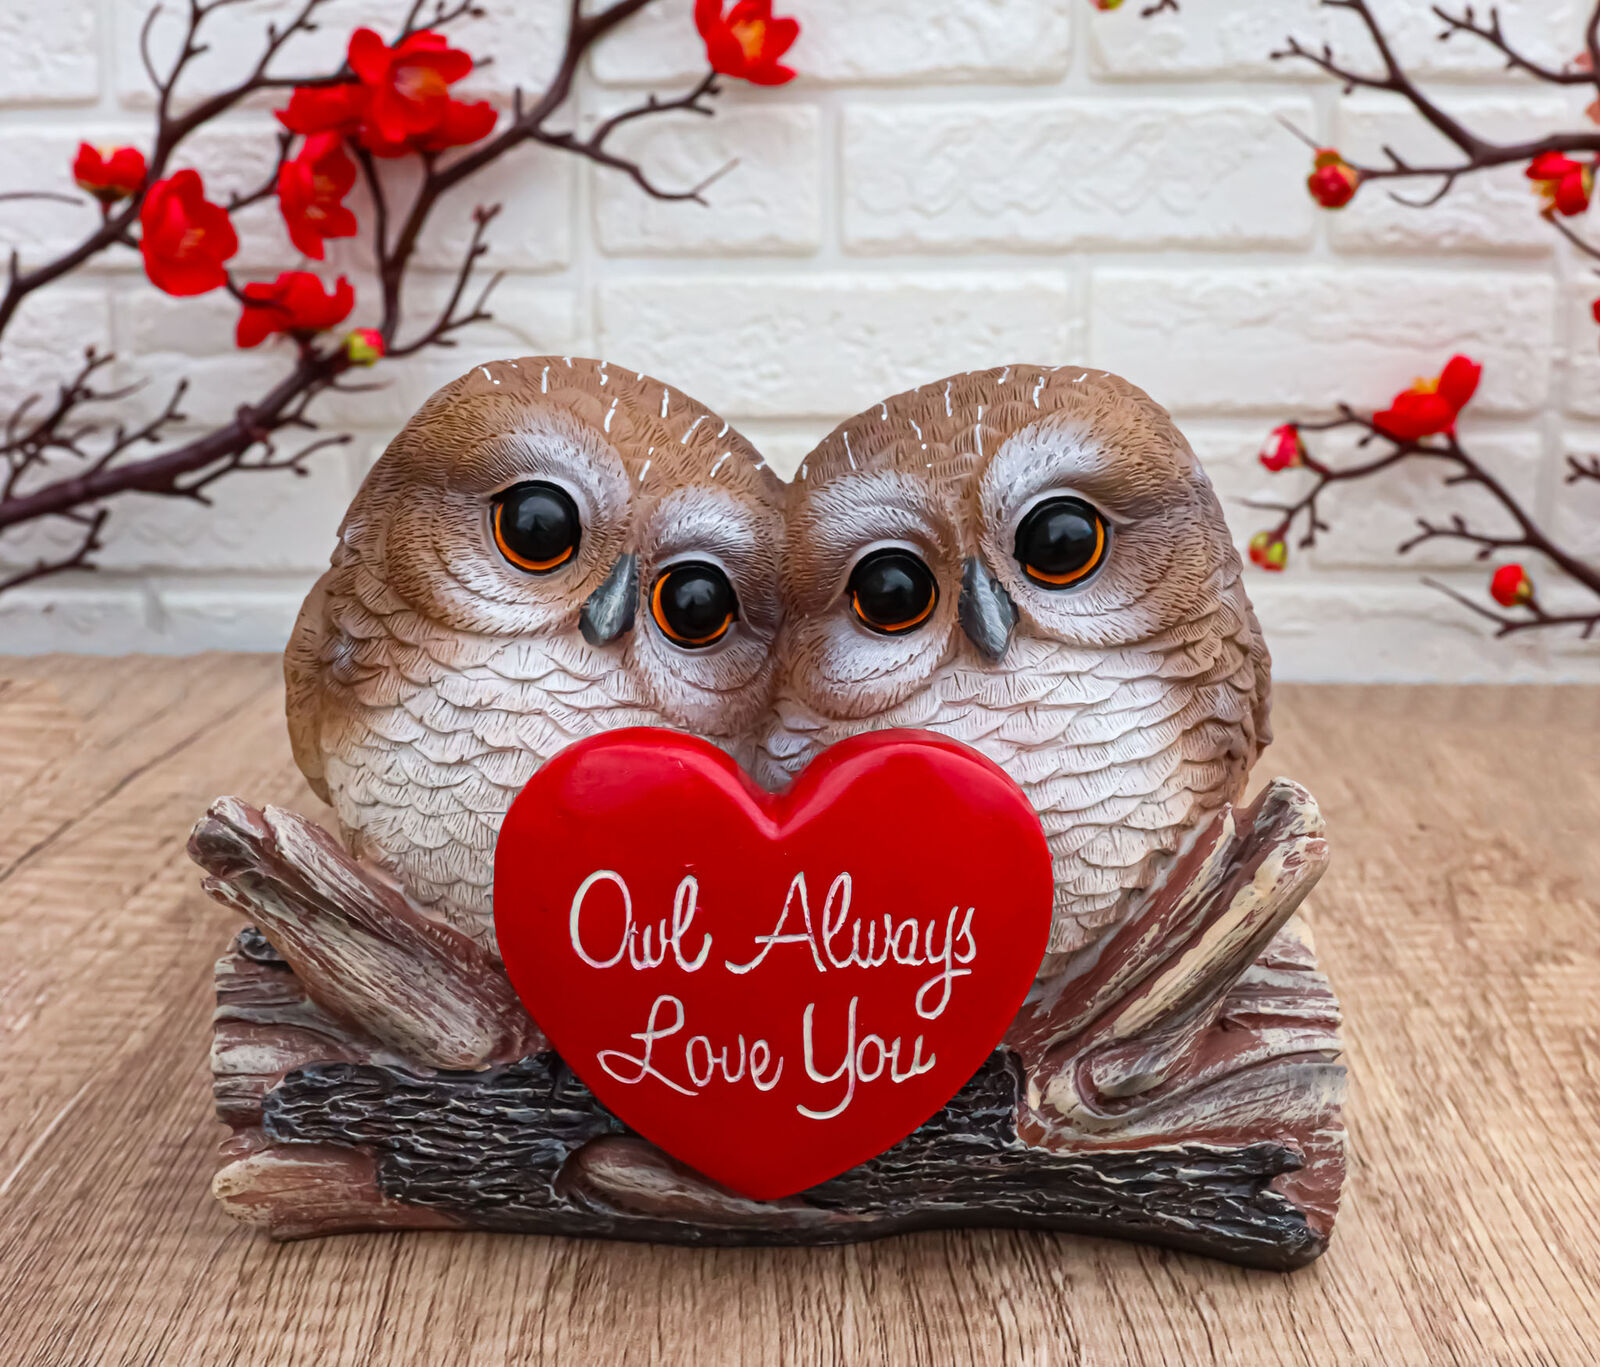 Romantic Owl Couple Statue Owl Always Love You Owl Lovebirds Holding Heart Sign